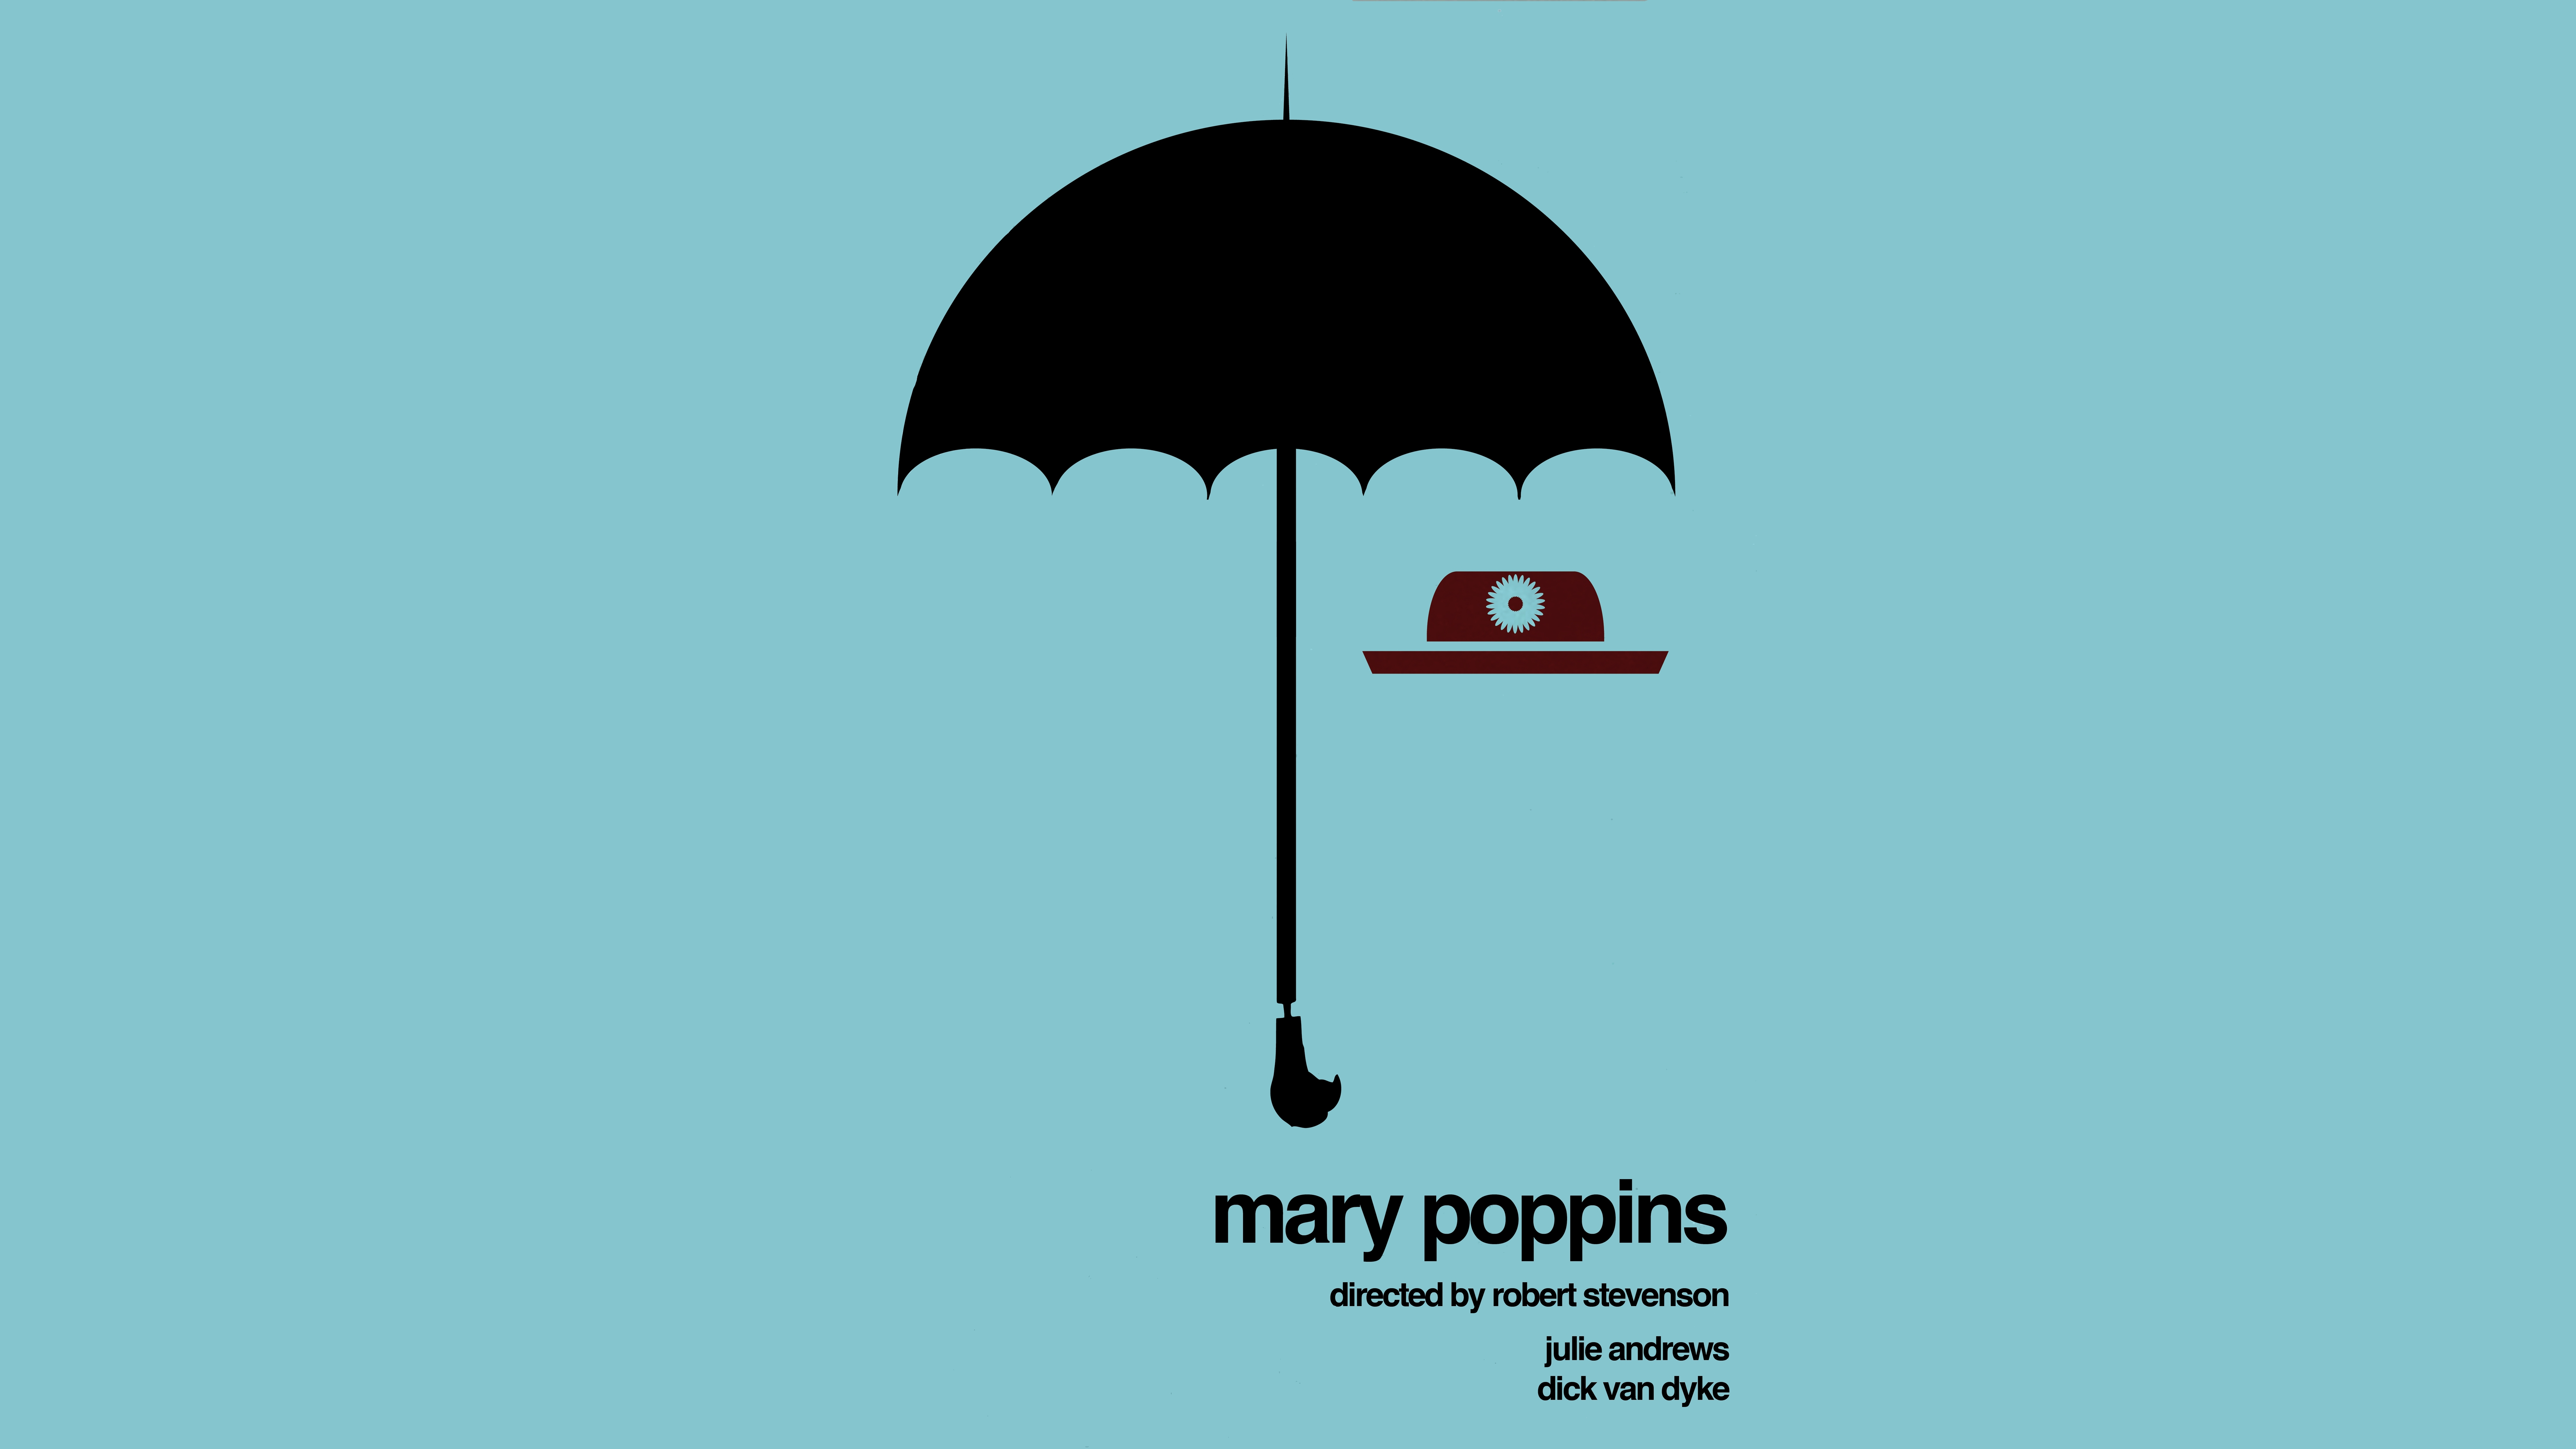 mary poppins wallpaper,umbrella,blue,product,illustration,azure